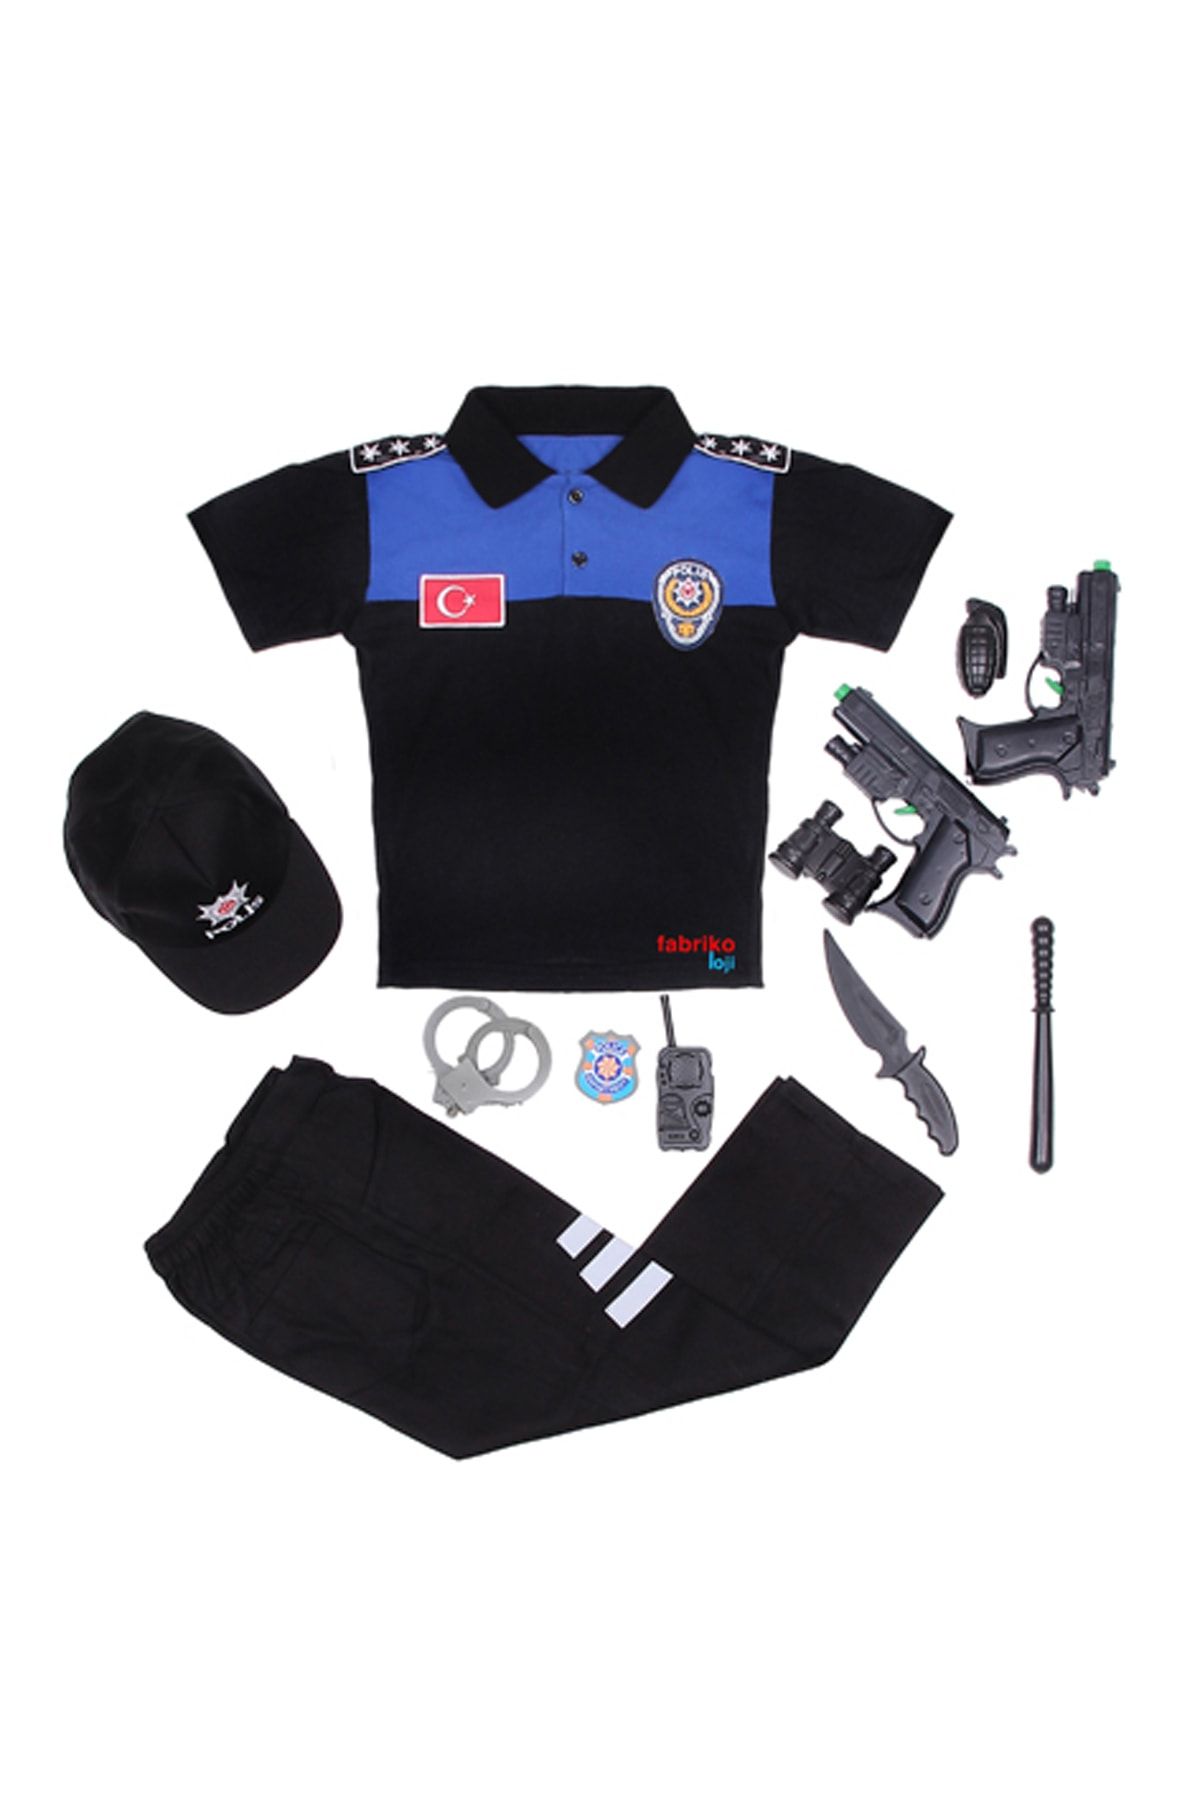 fabrikoloji Çocuk Polis Sivil Toplum Polis Kostümü Unisex Kıyafet A2-2